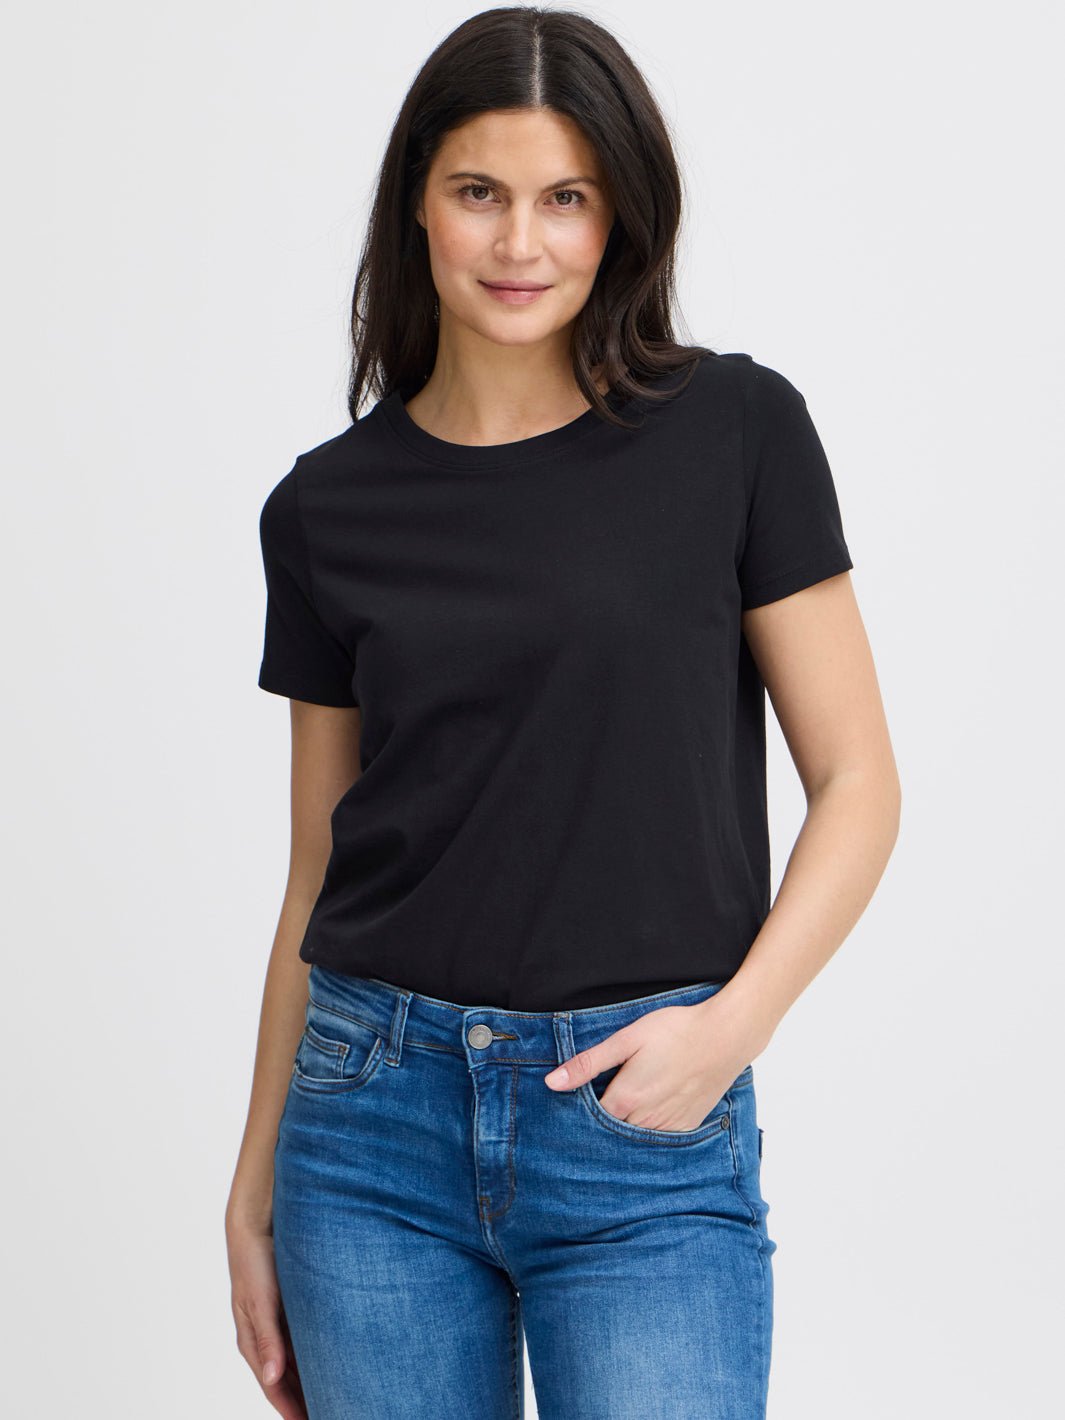 Fransa Zashoulder 1 t-shirt black - Online-Mode